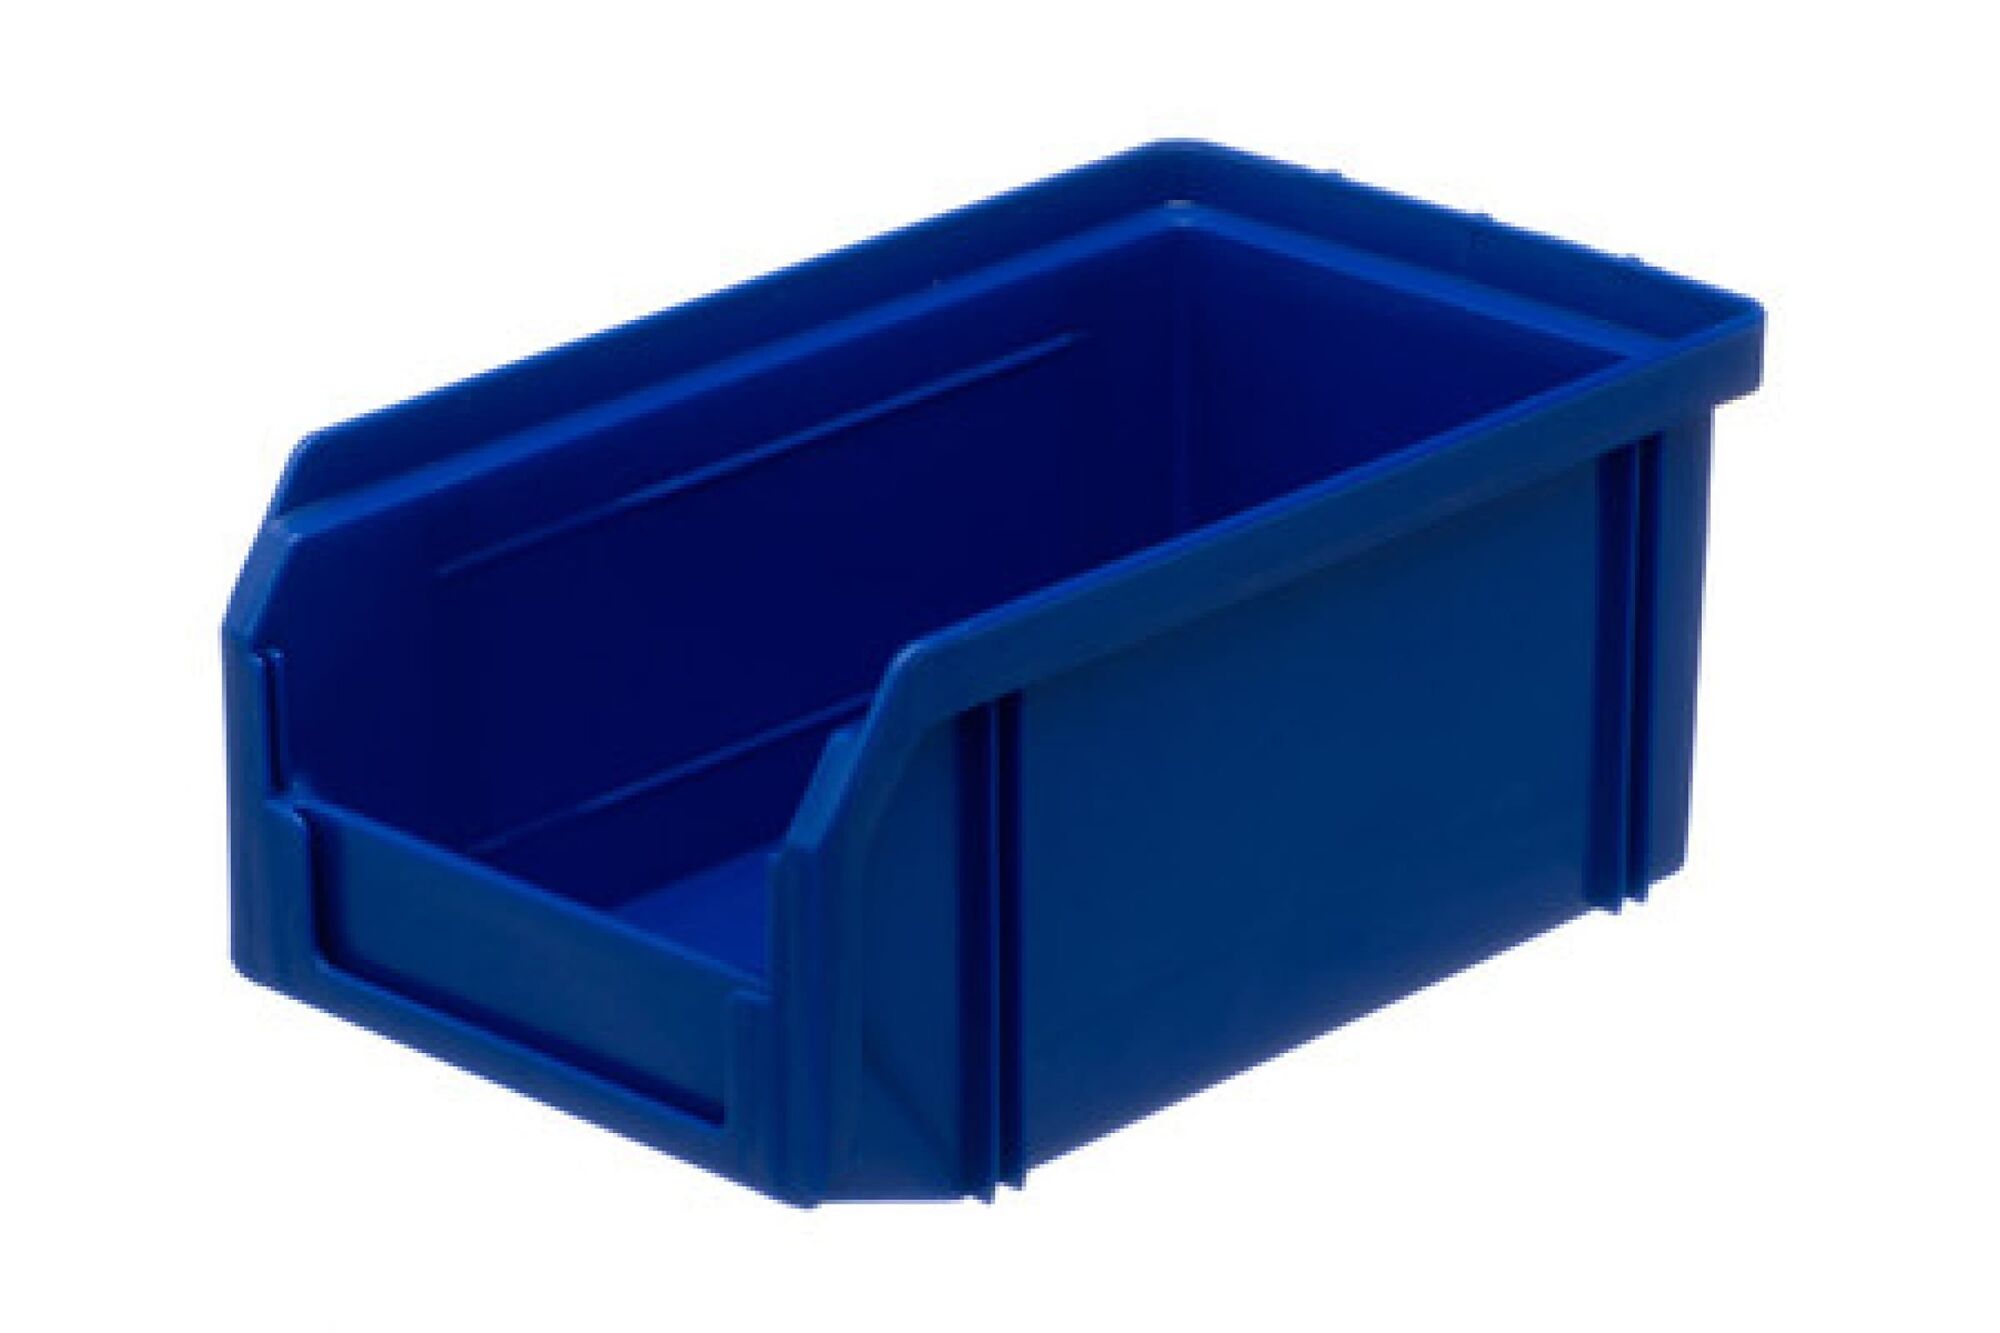 Лоток Стелла V-1 литр, синий Пластиковый 4623721402456